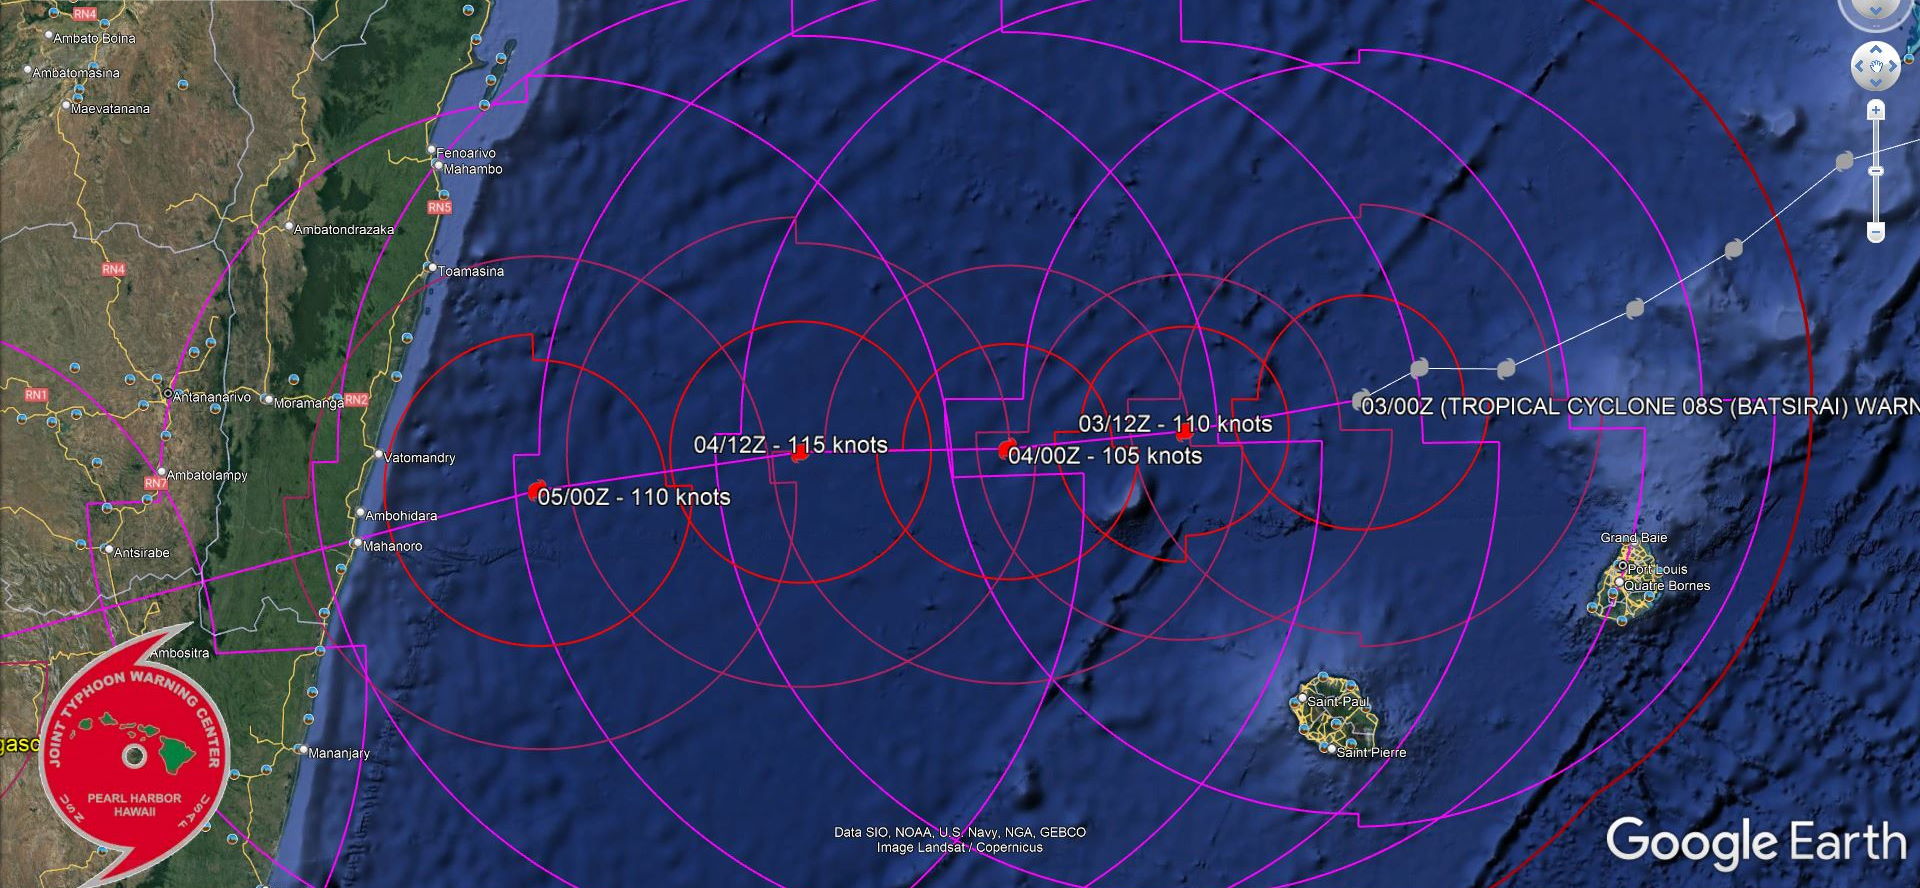 TC 08S(BATSIRAI): CAT 4 US tracking apprx 200km North of Réunion island// TC 09P, Invest 90S updates, 03/03utc